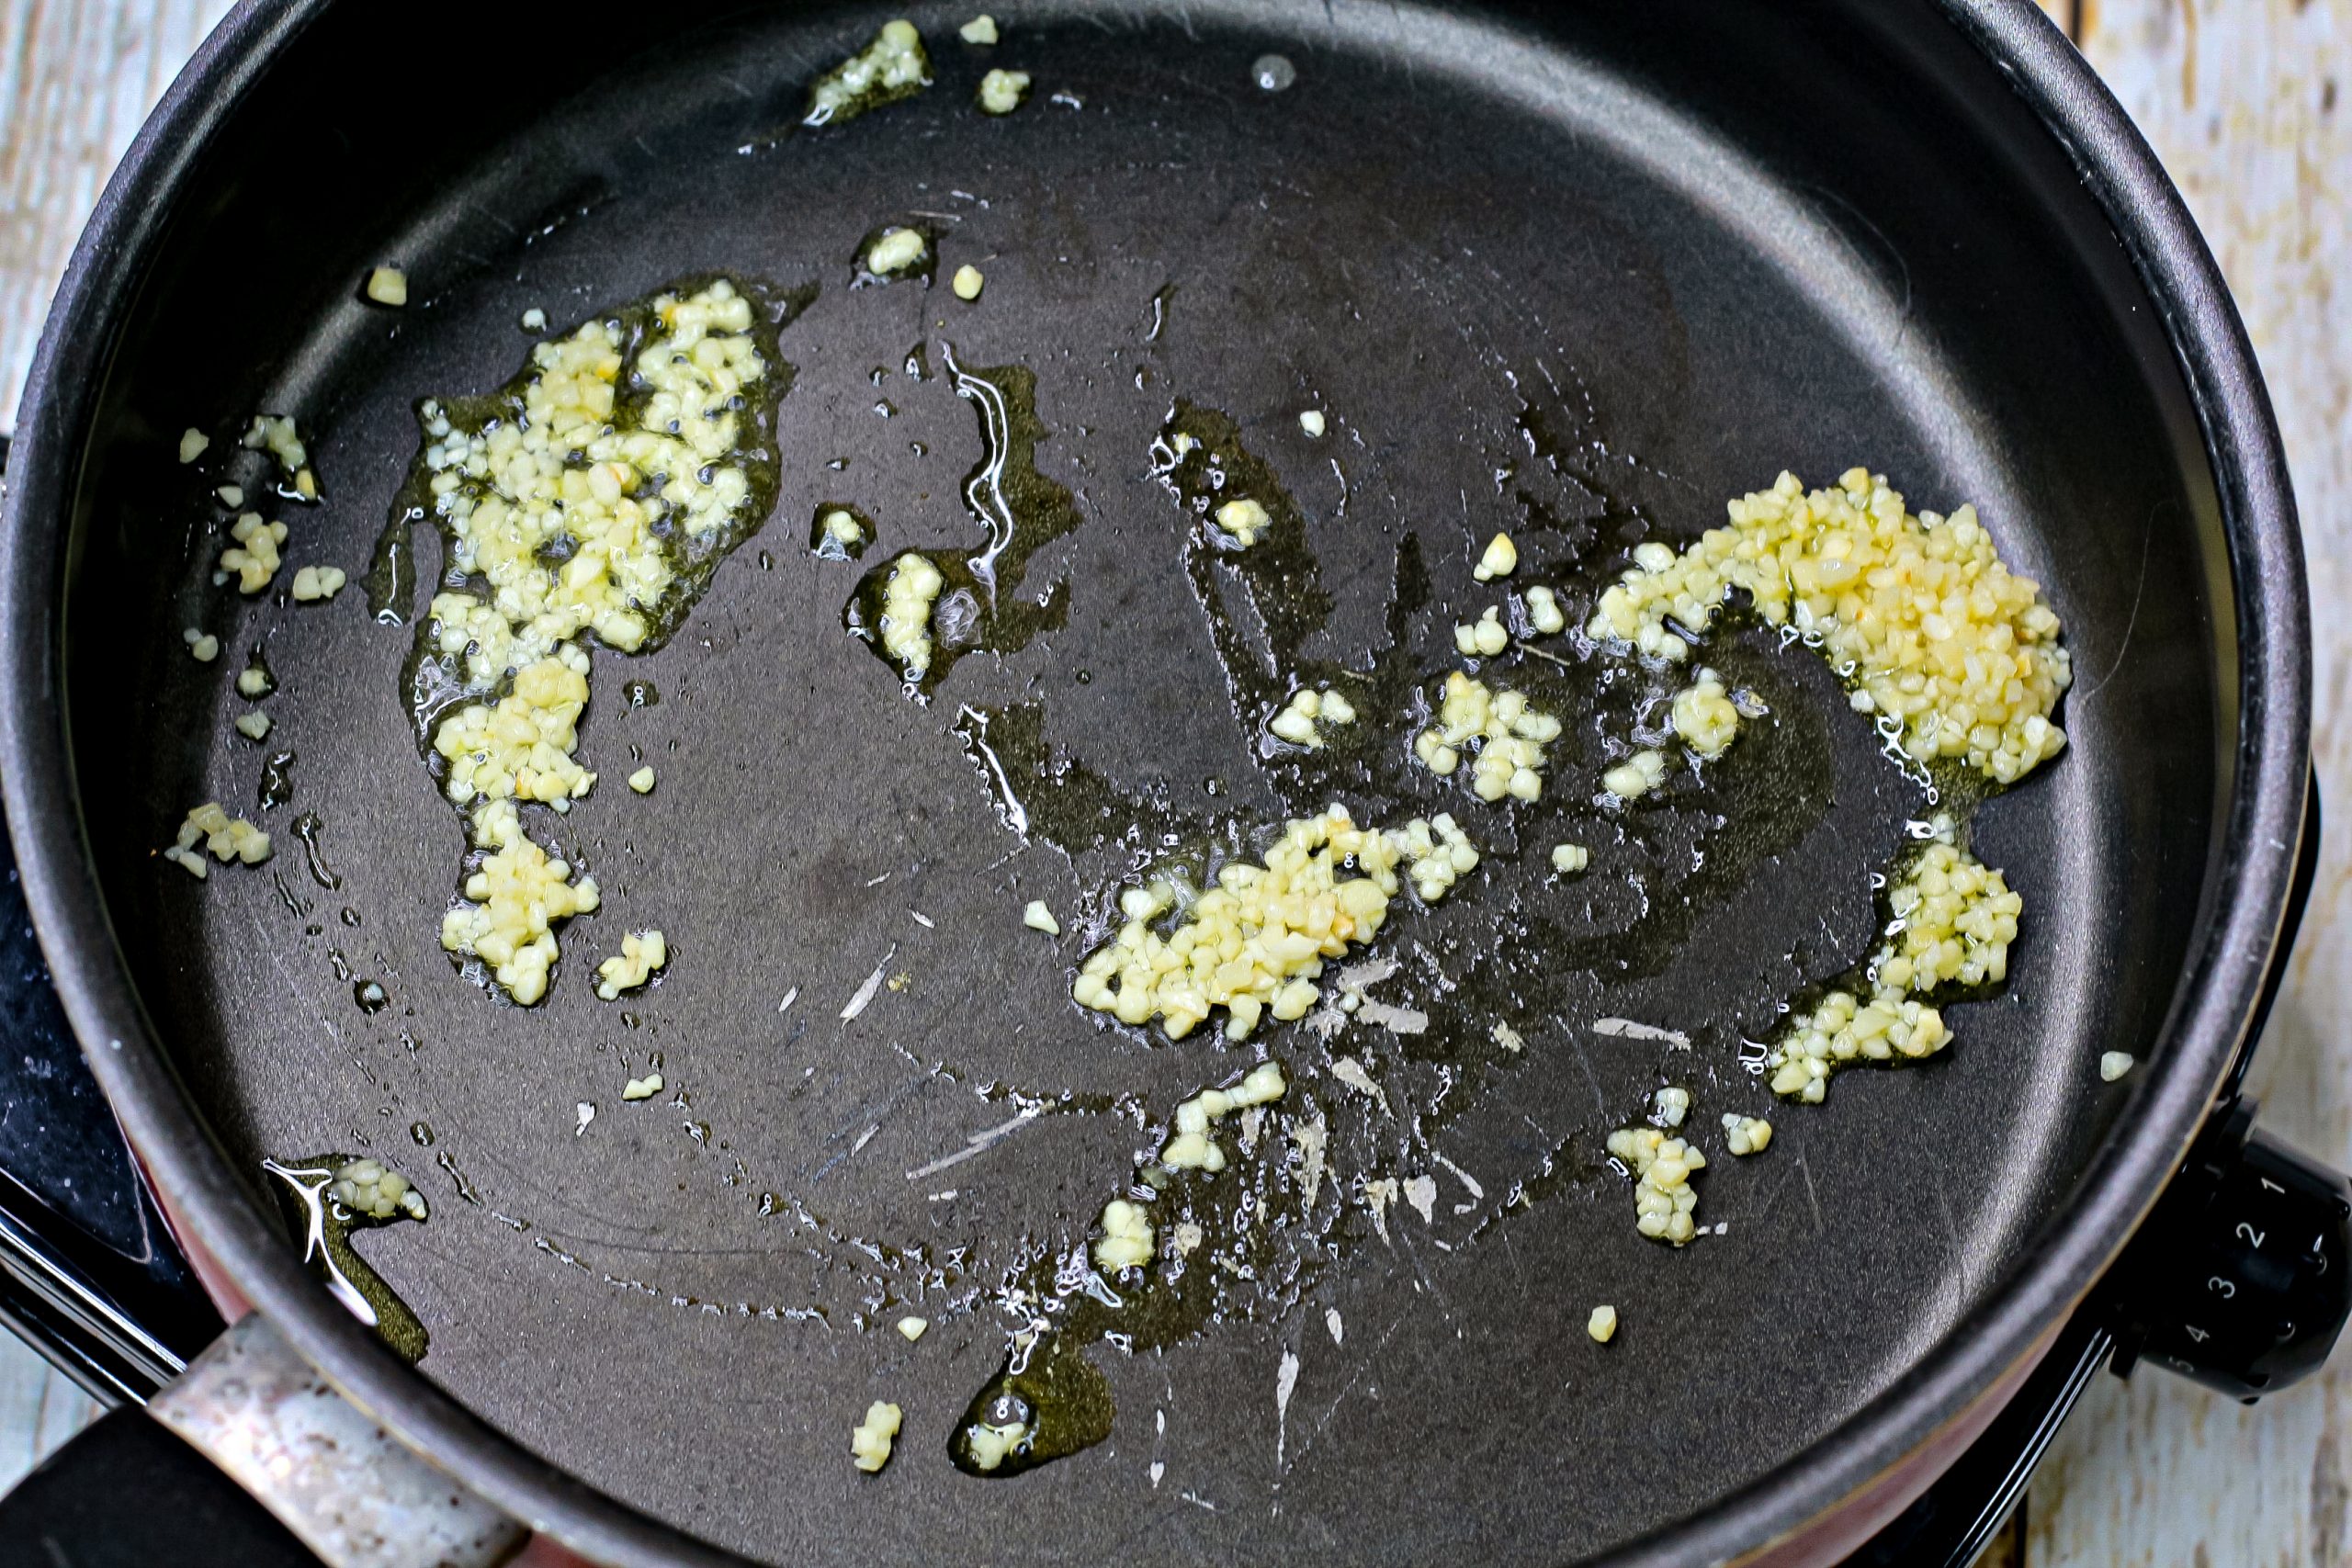 Stir the garlic for 1 minute, until fragrant.